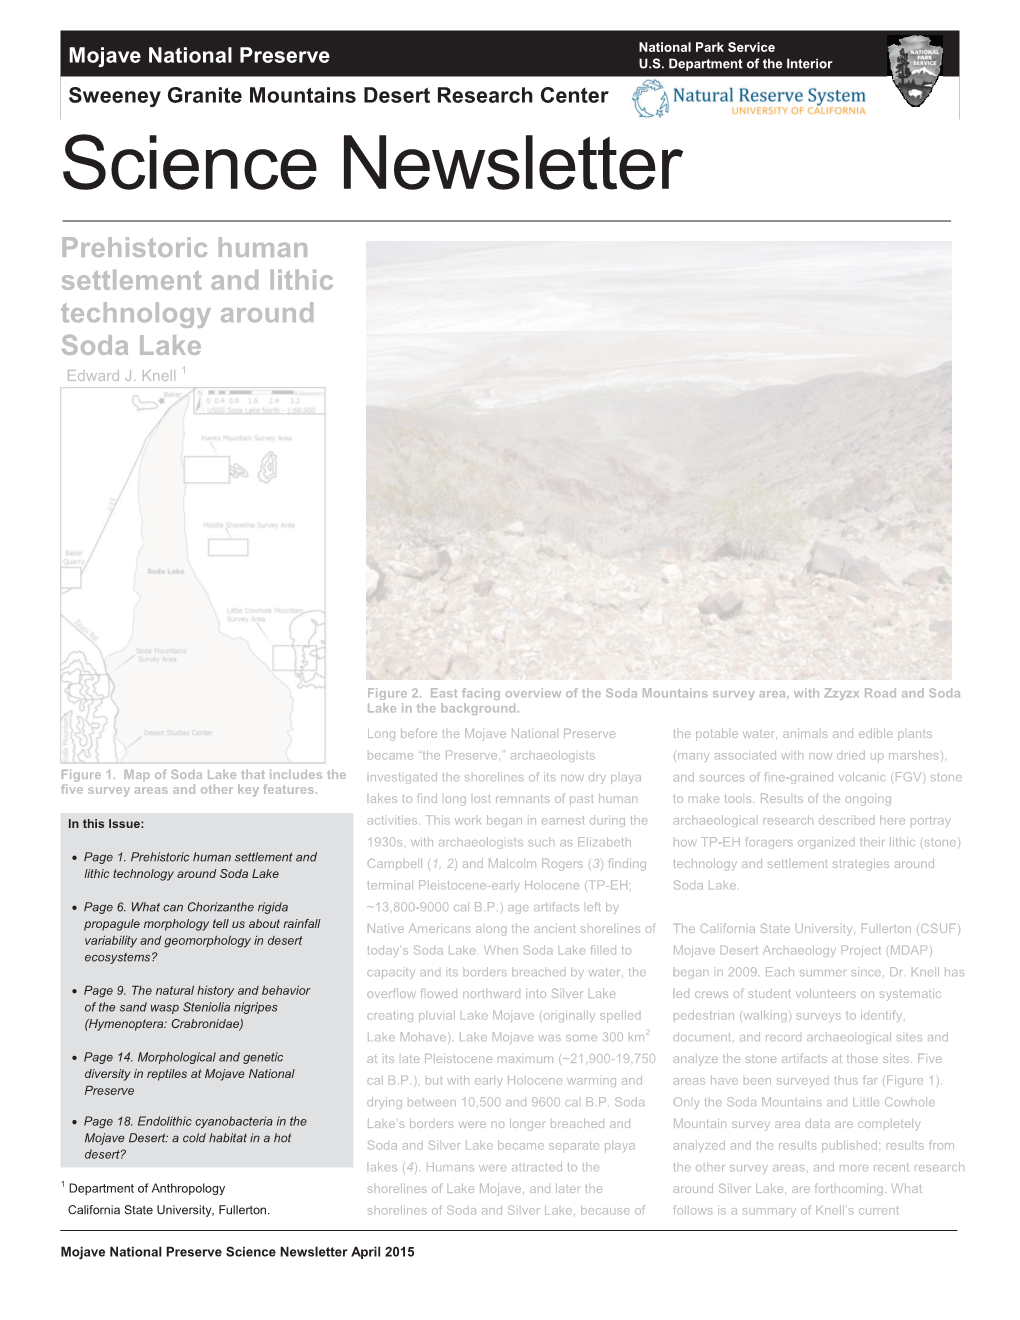 Mojave National Preserve Science Newsletter 8